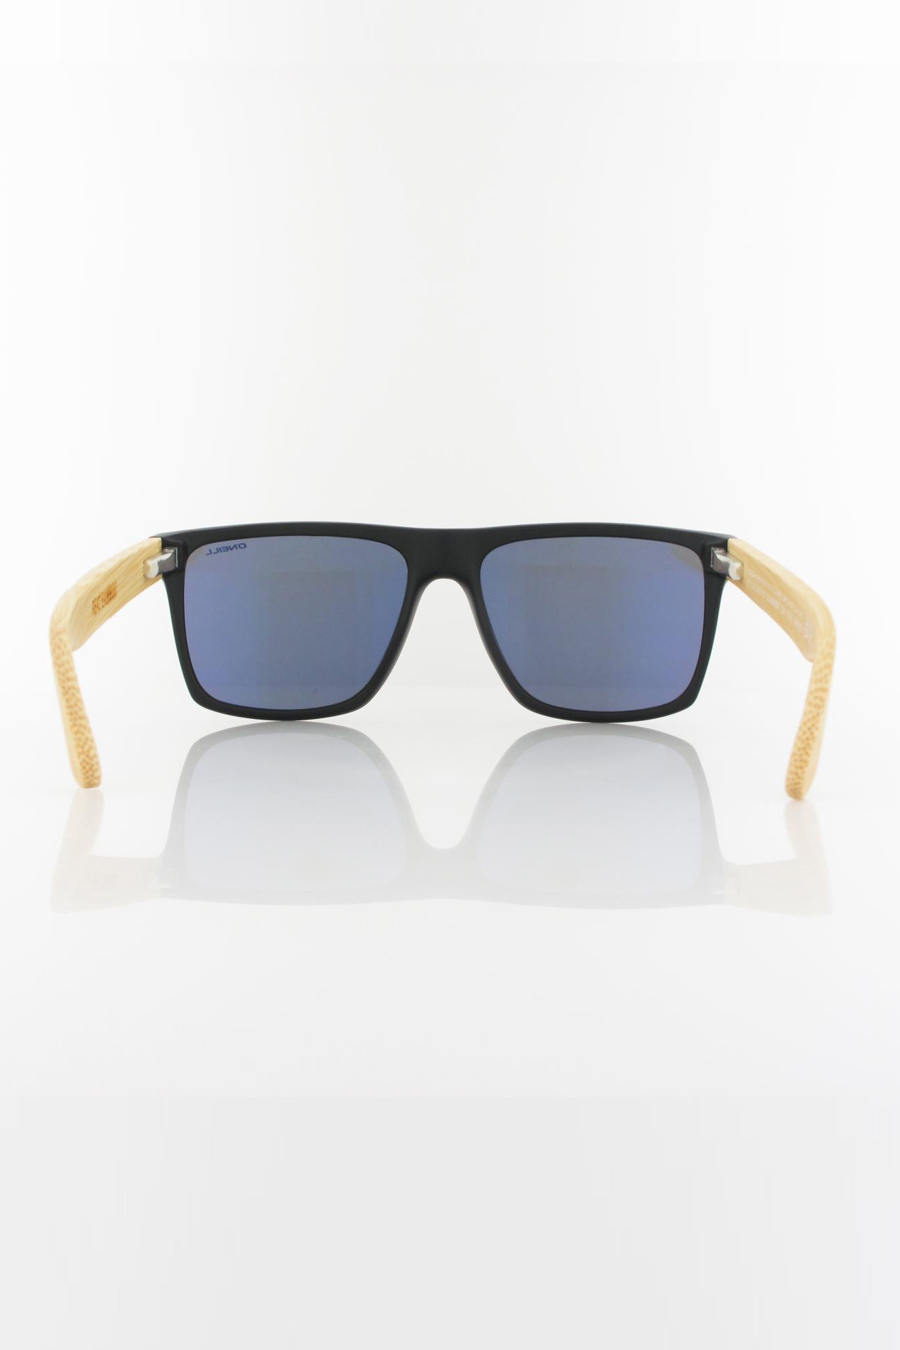 Sunglasses ONEILL ONS-HARWOOD20-104P